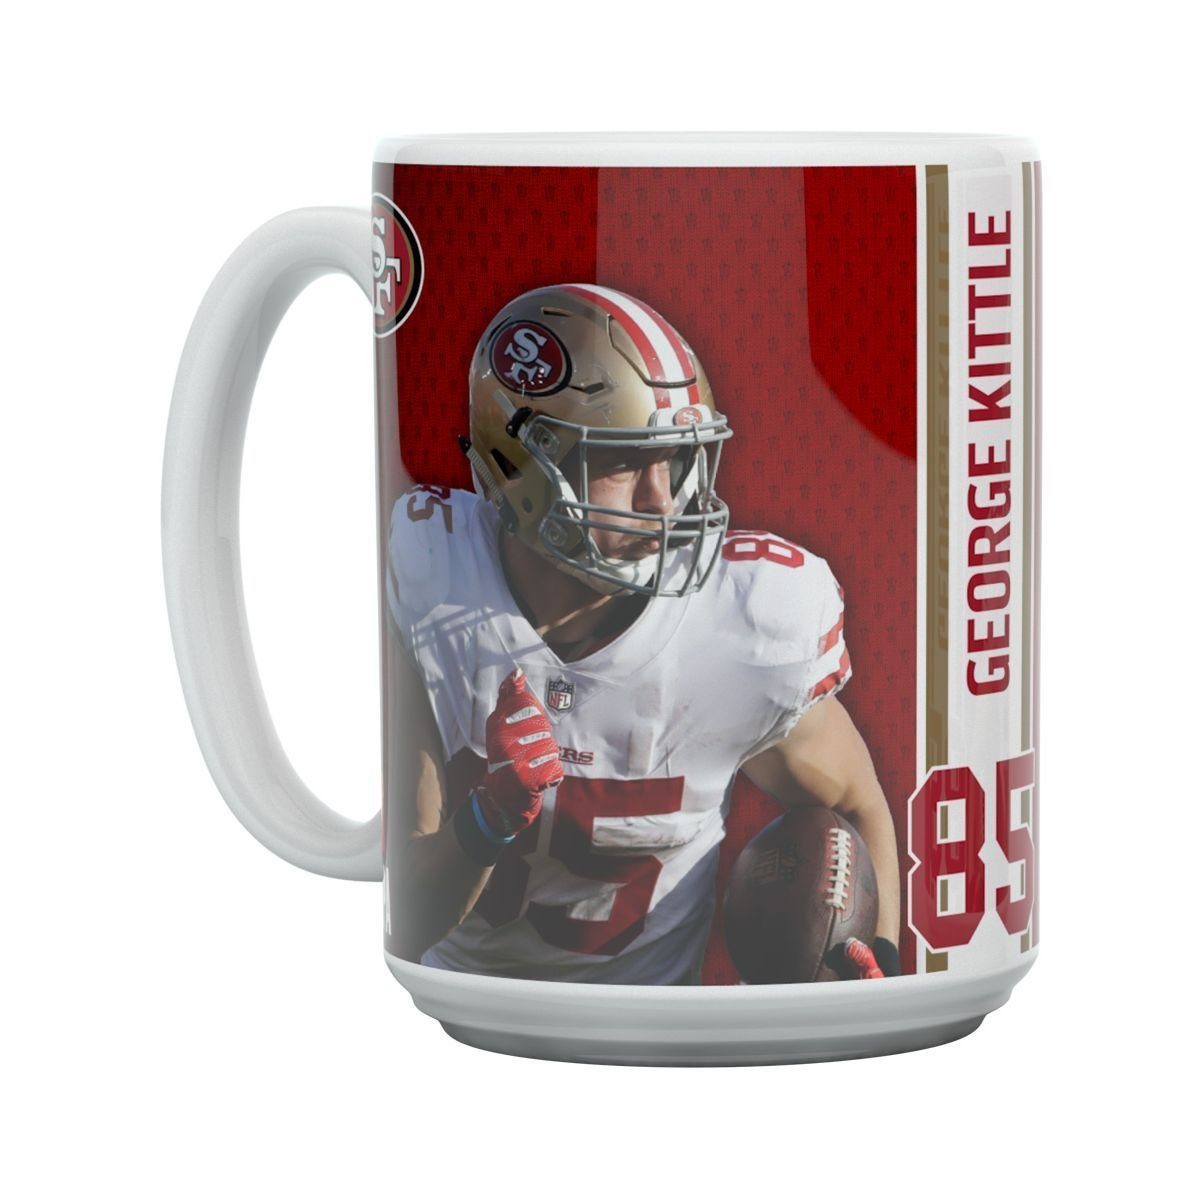 Great Branding Tasse Kittle George 49ers MOTION NFL San Francisco Tasse